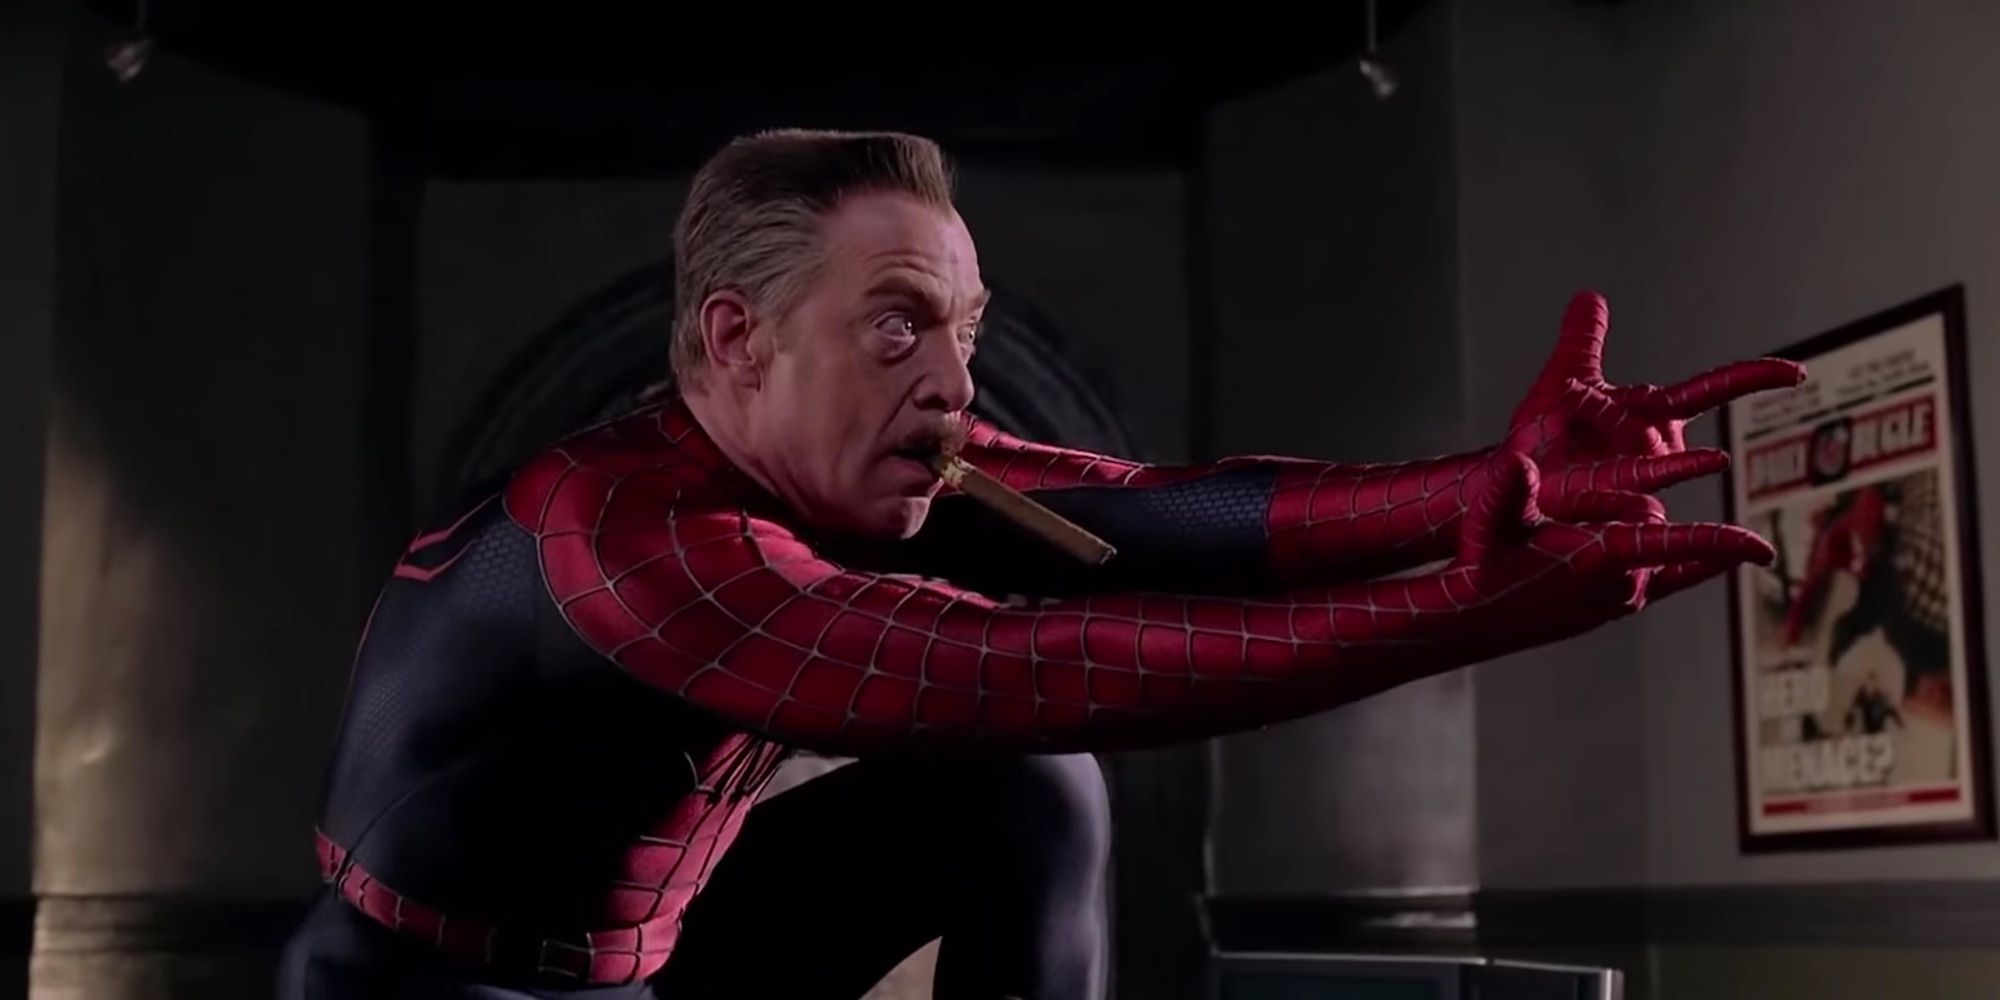 JK Simmons dressed as Spider-Man